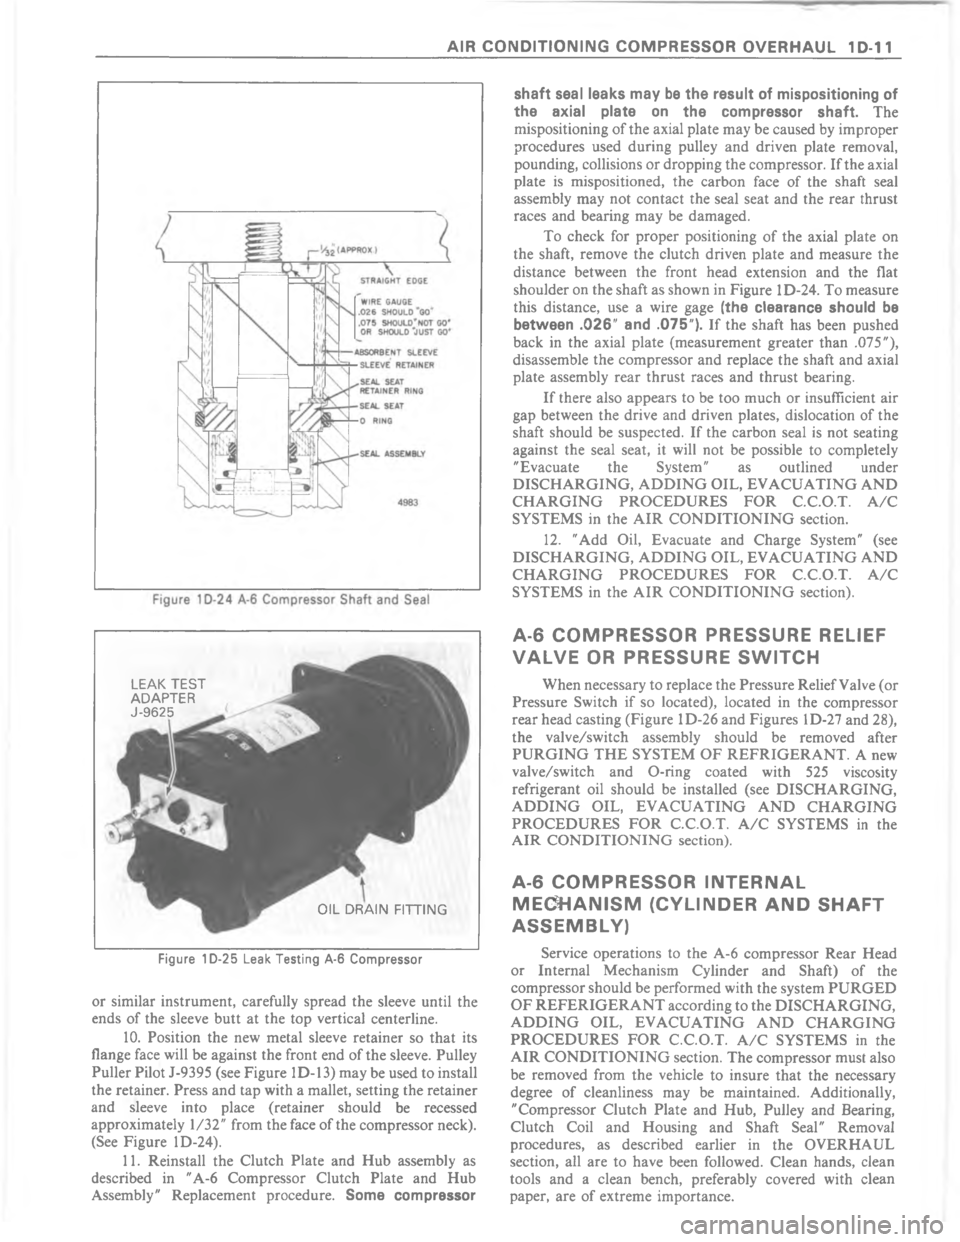 CHEVROLET LIGHT DUTY TRUCK 1980  Repair Everhaul Manual Downloaded from www.Manualslib.com manuals search engine  	   !$7)/-   C@ -8 	-%6$(7 E 0&./-%%0/


8





?
88

&0&-%
6

